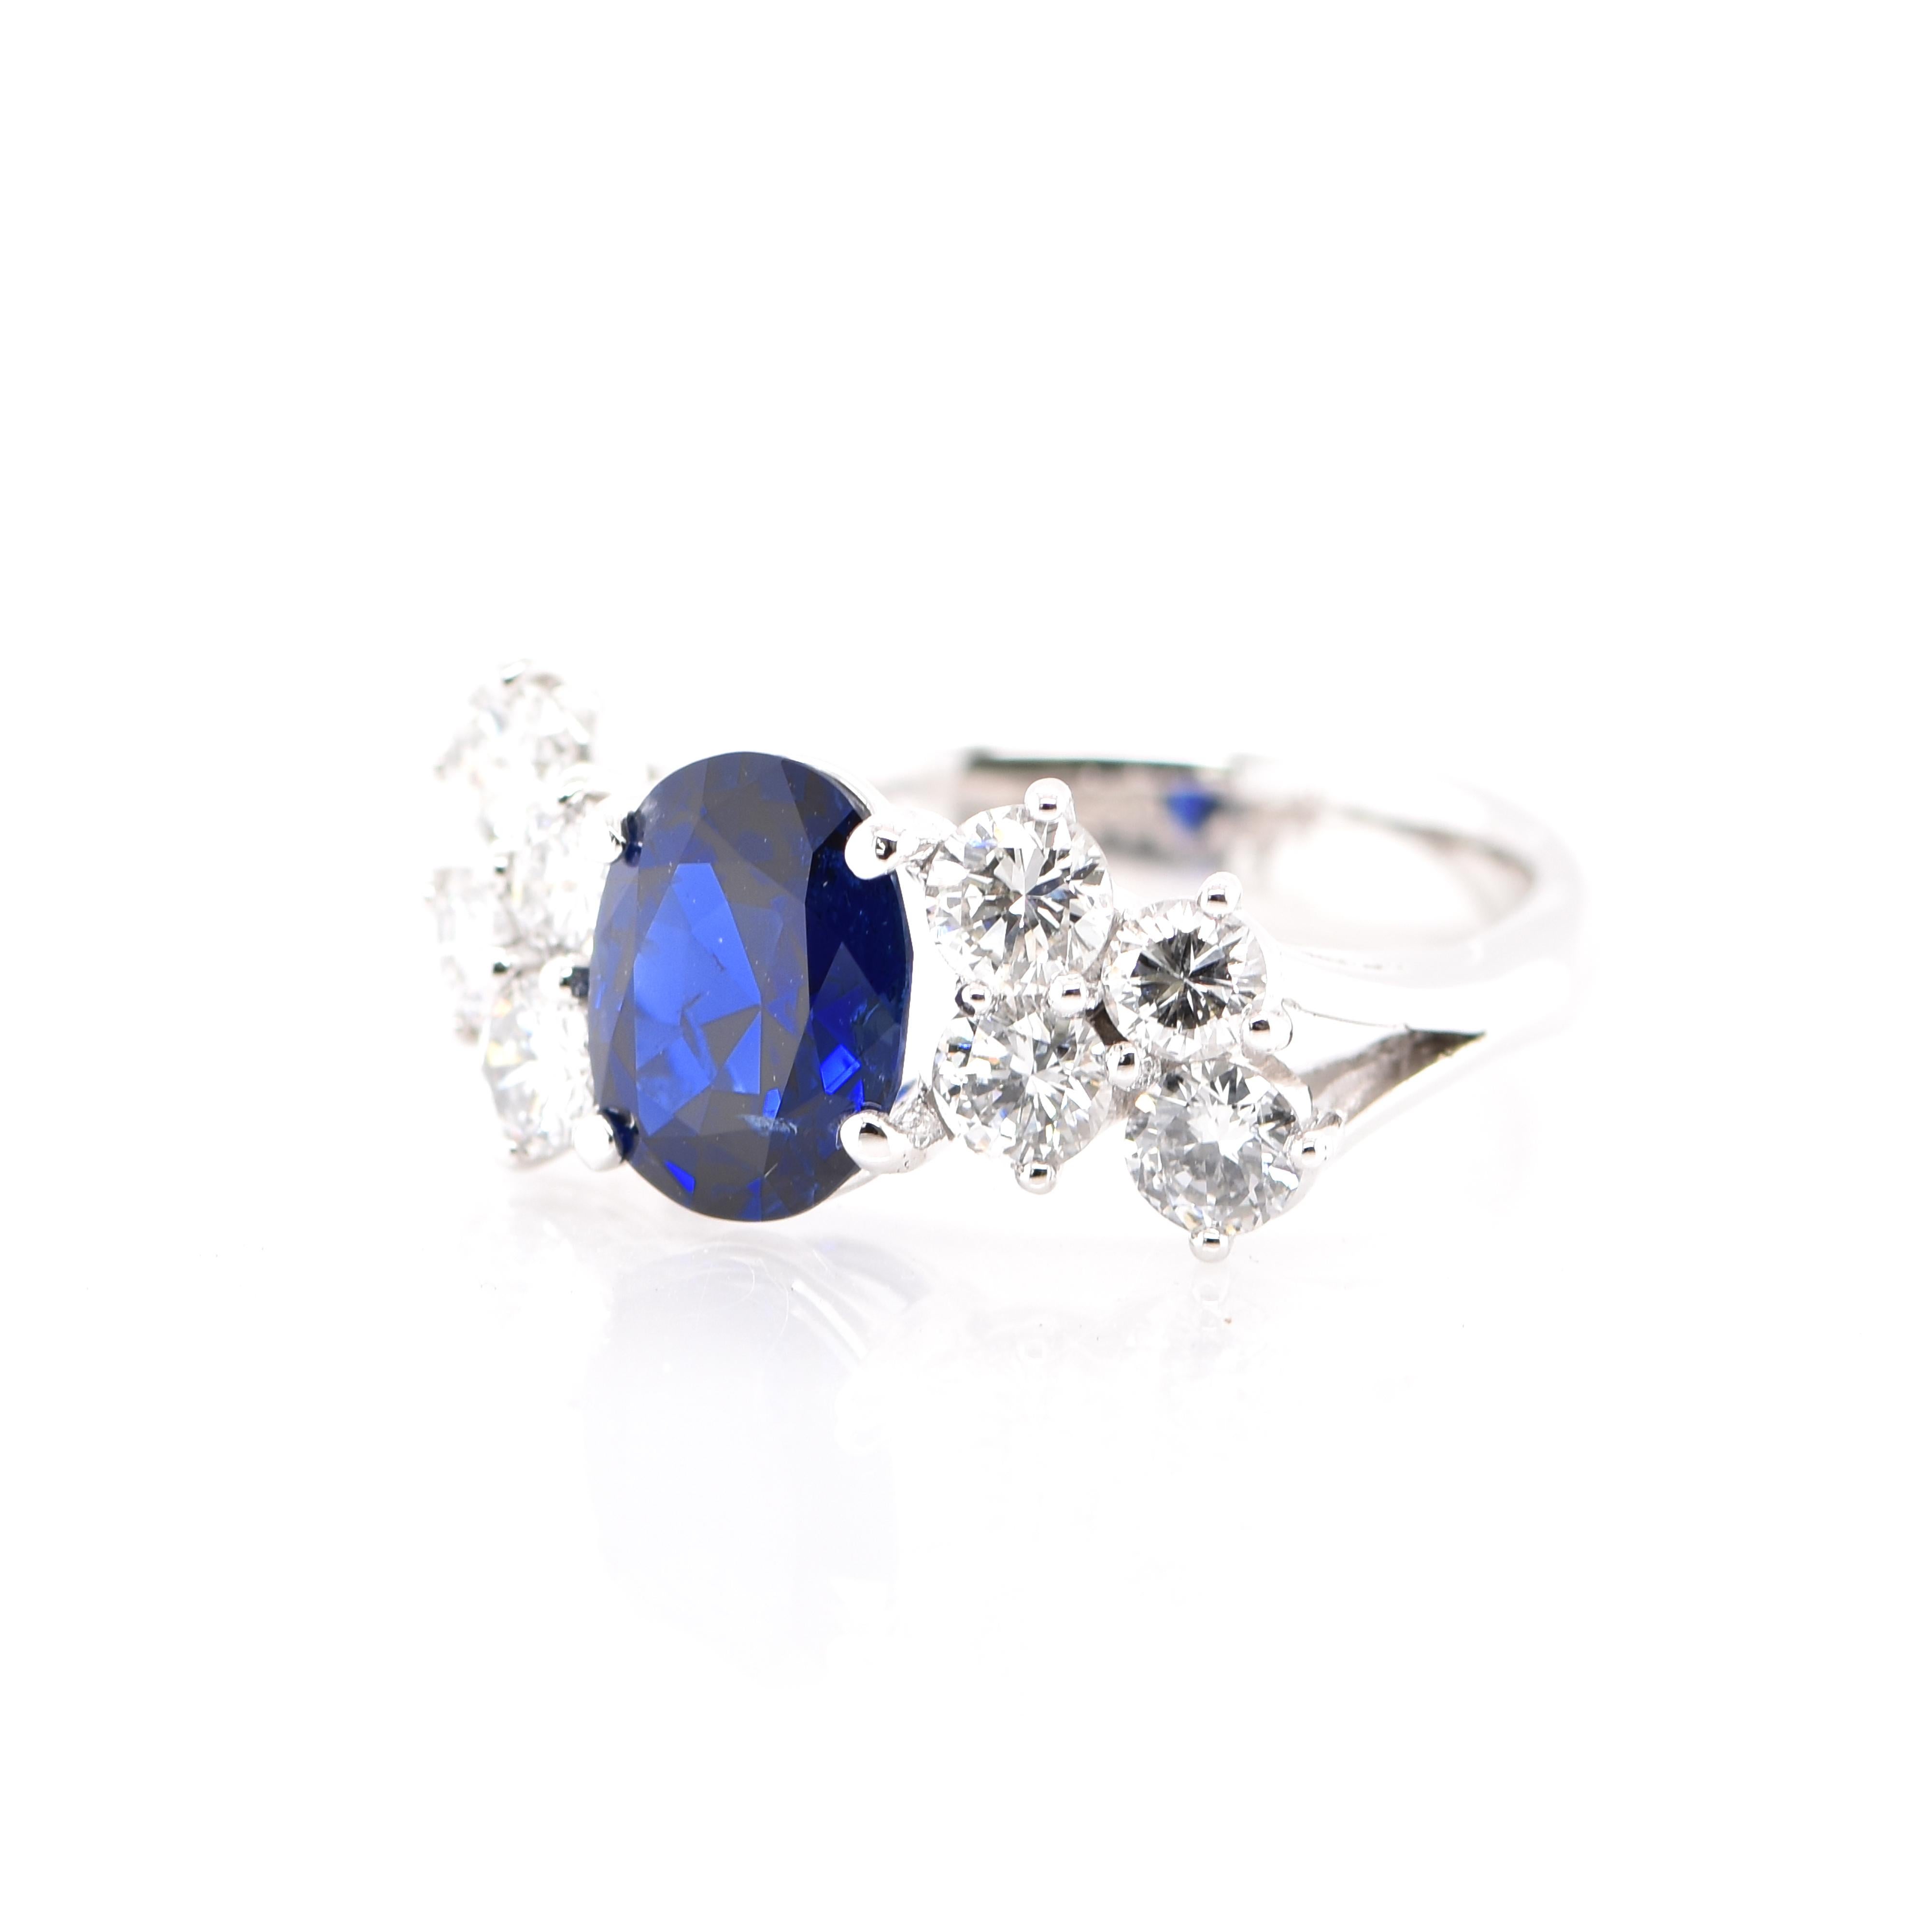 Modern Royal Blue 2.36 Carat Untreated Burmese Sapphire & Diamond Ring Set in Platinum